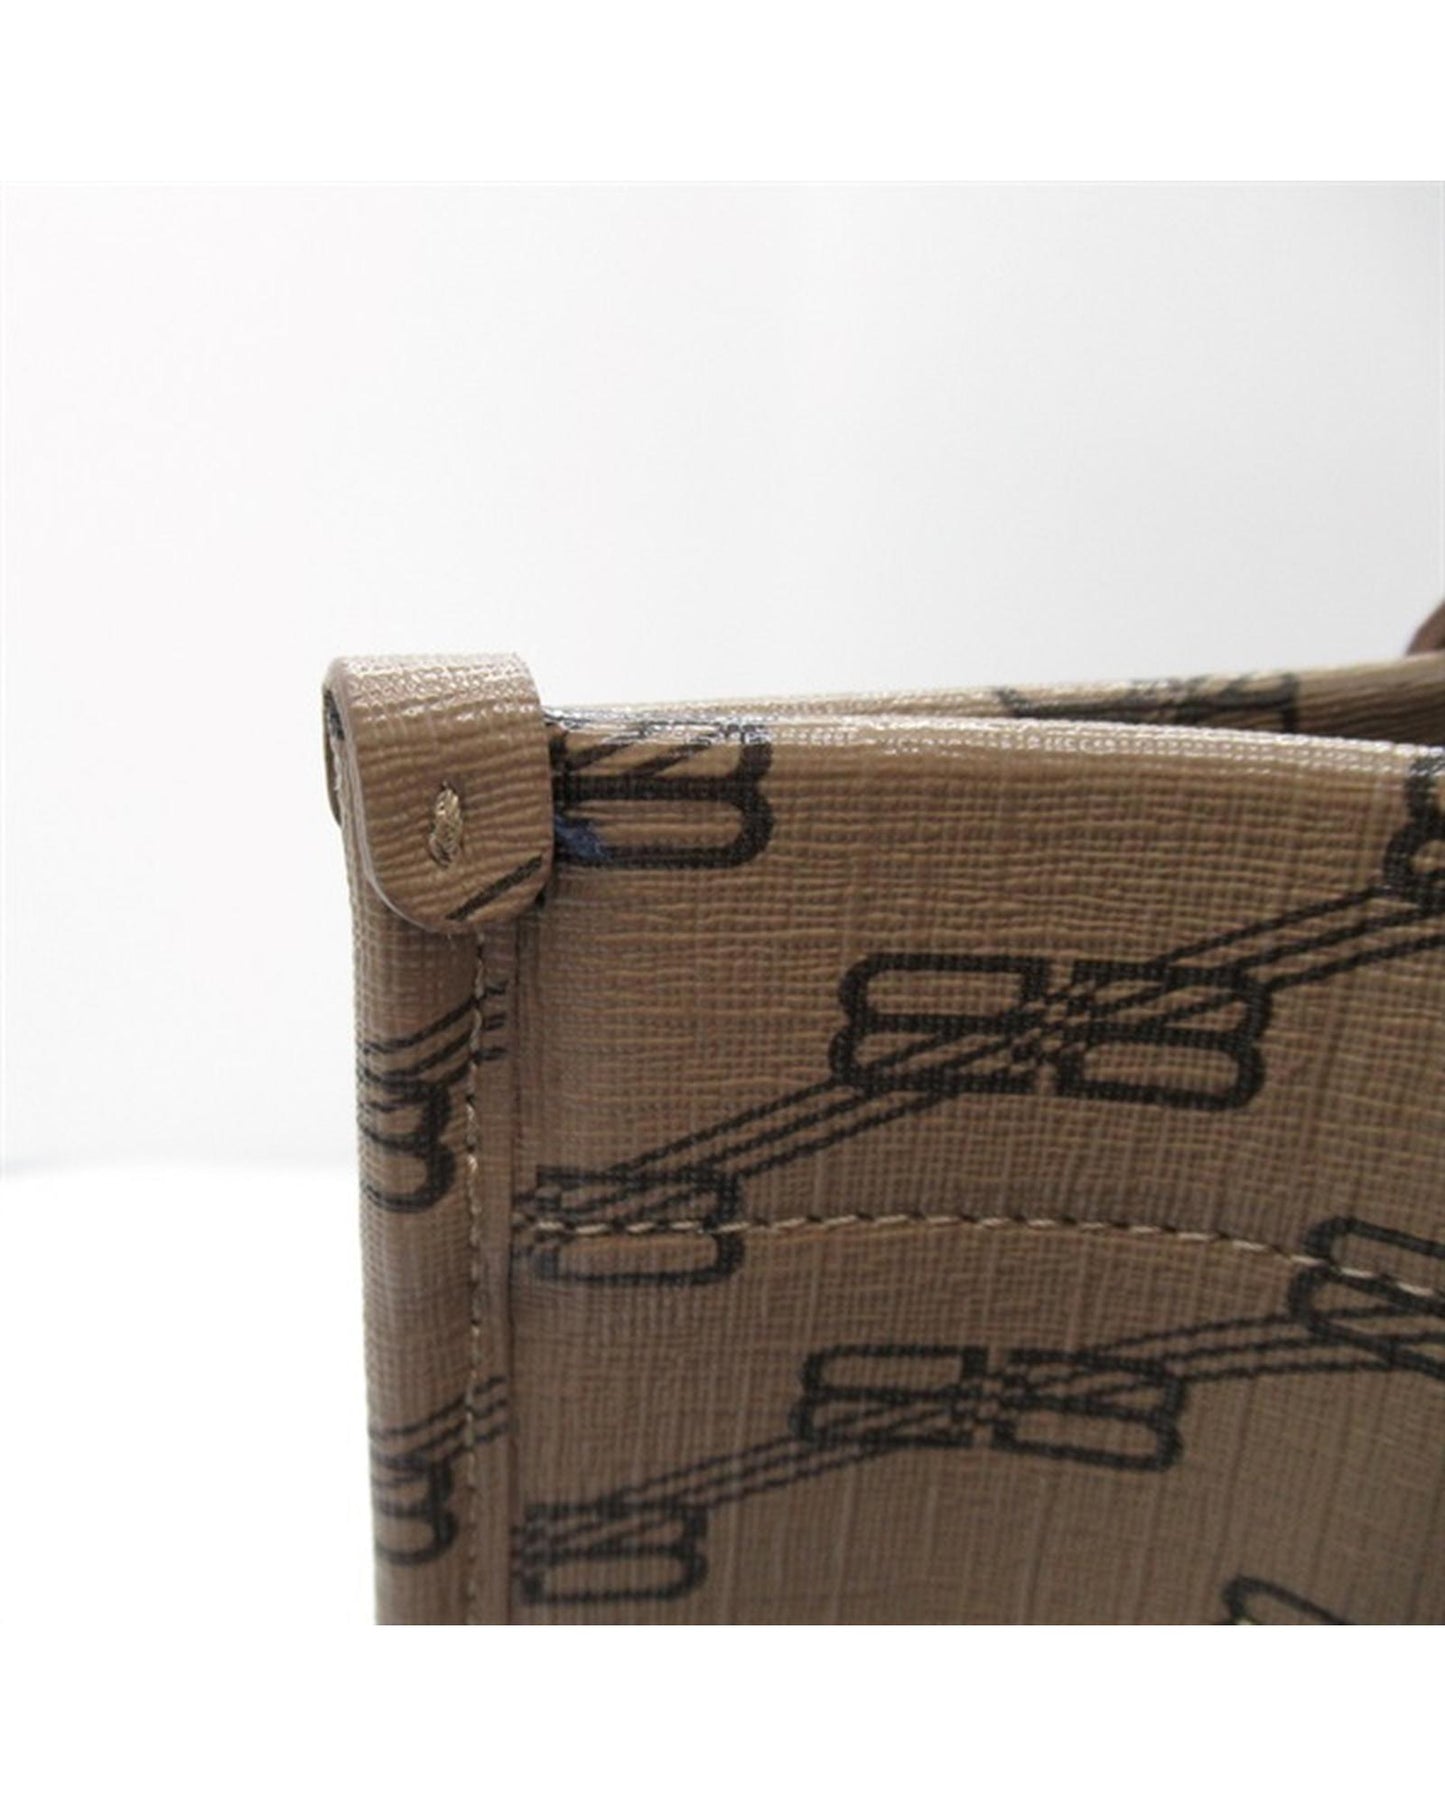 Balenciaga Women's Monogram Tote Bag in Brown in Brown